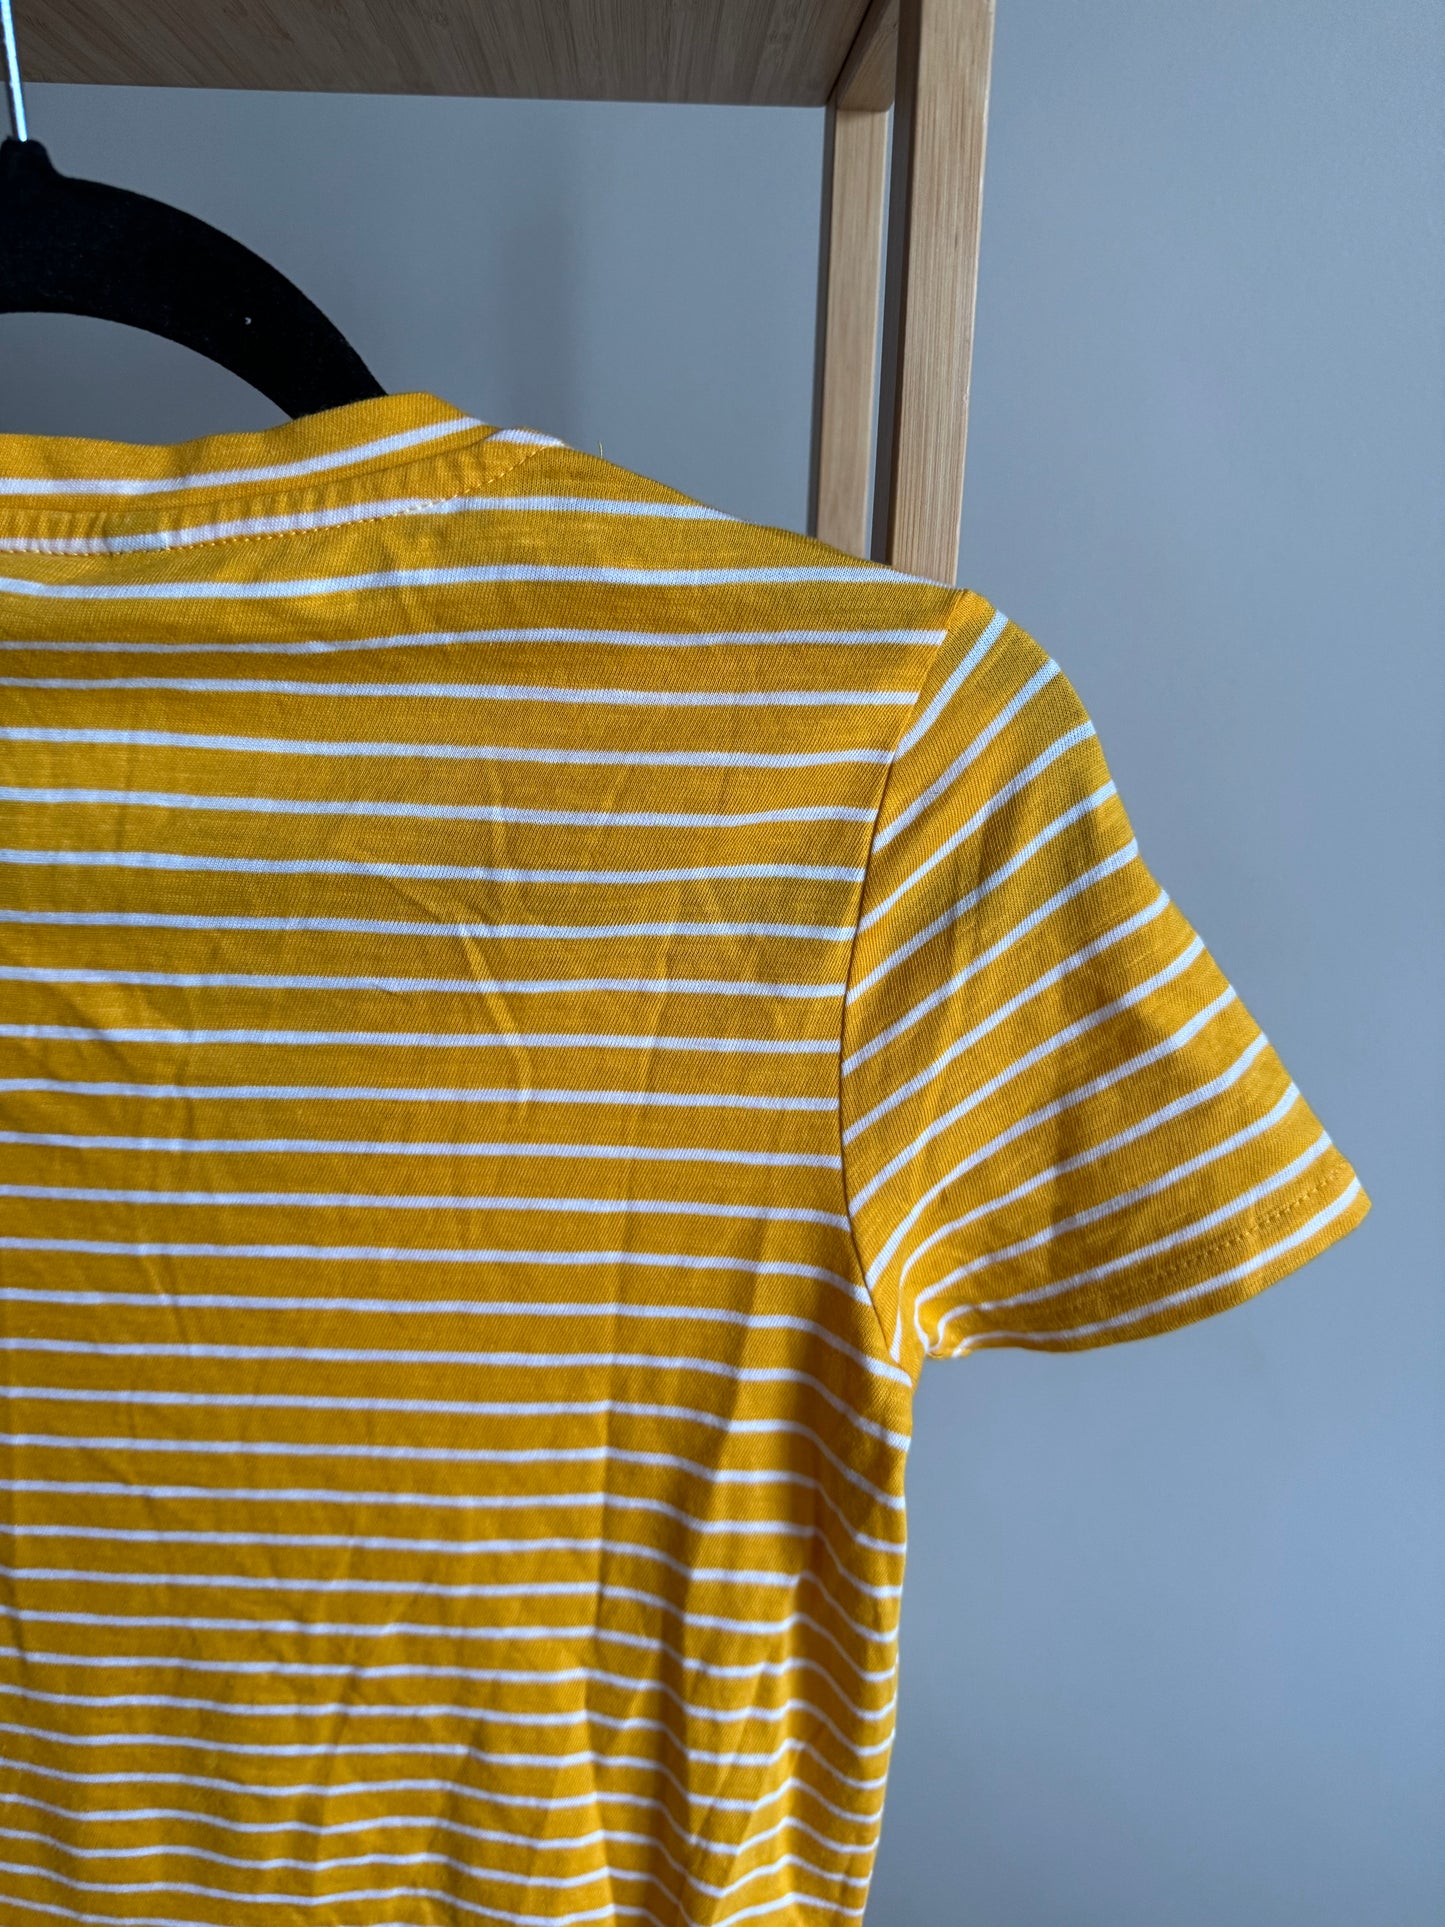 T-shirt Tommy Hilfiger rayé jaune Taille XS